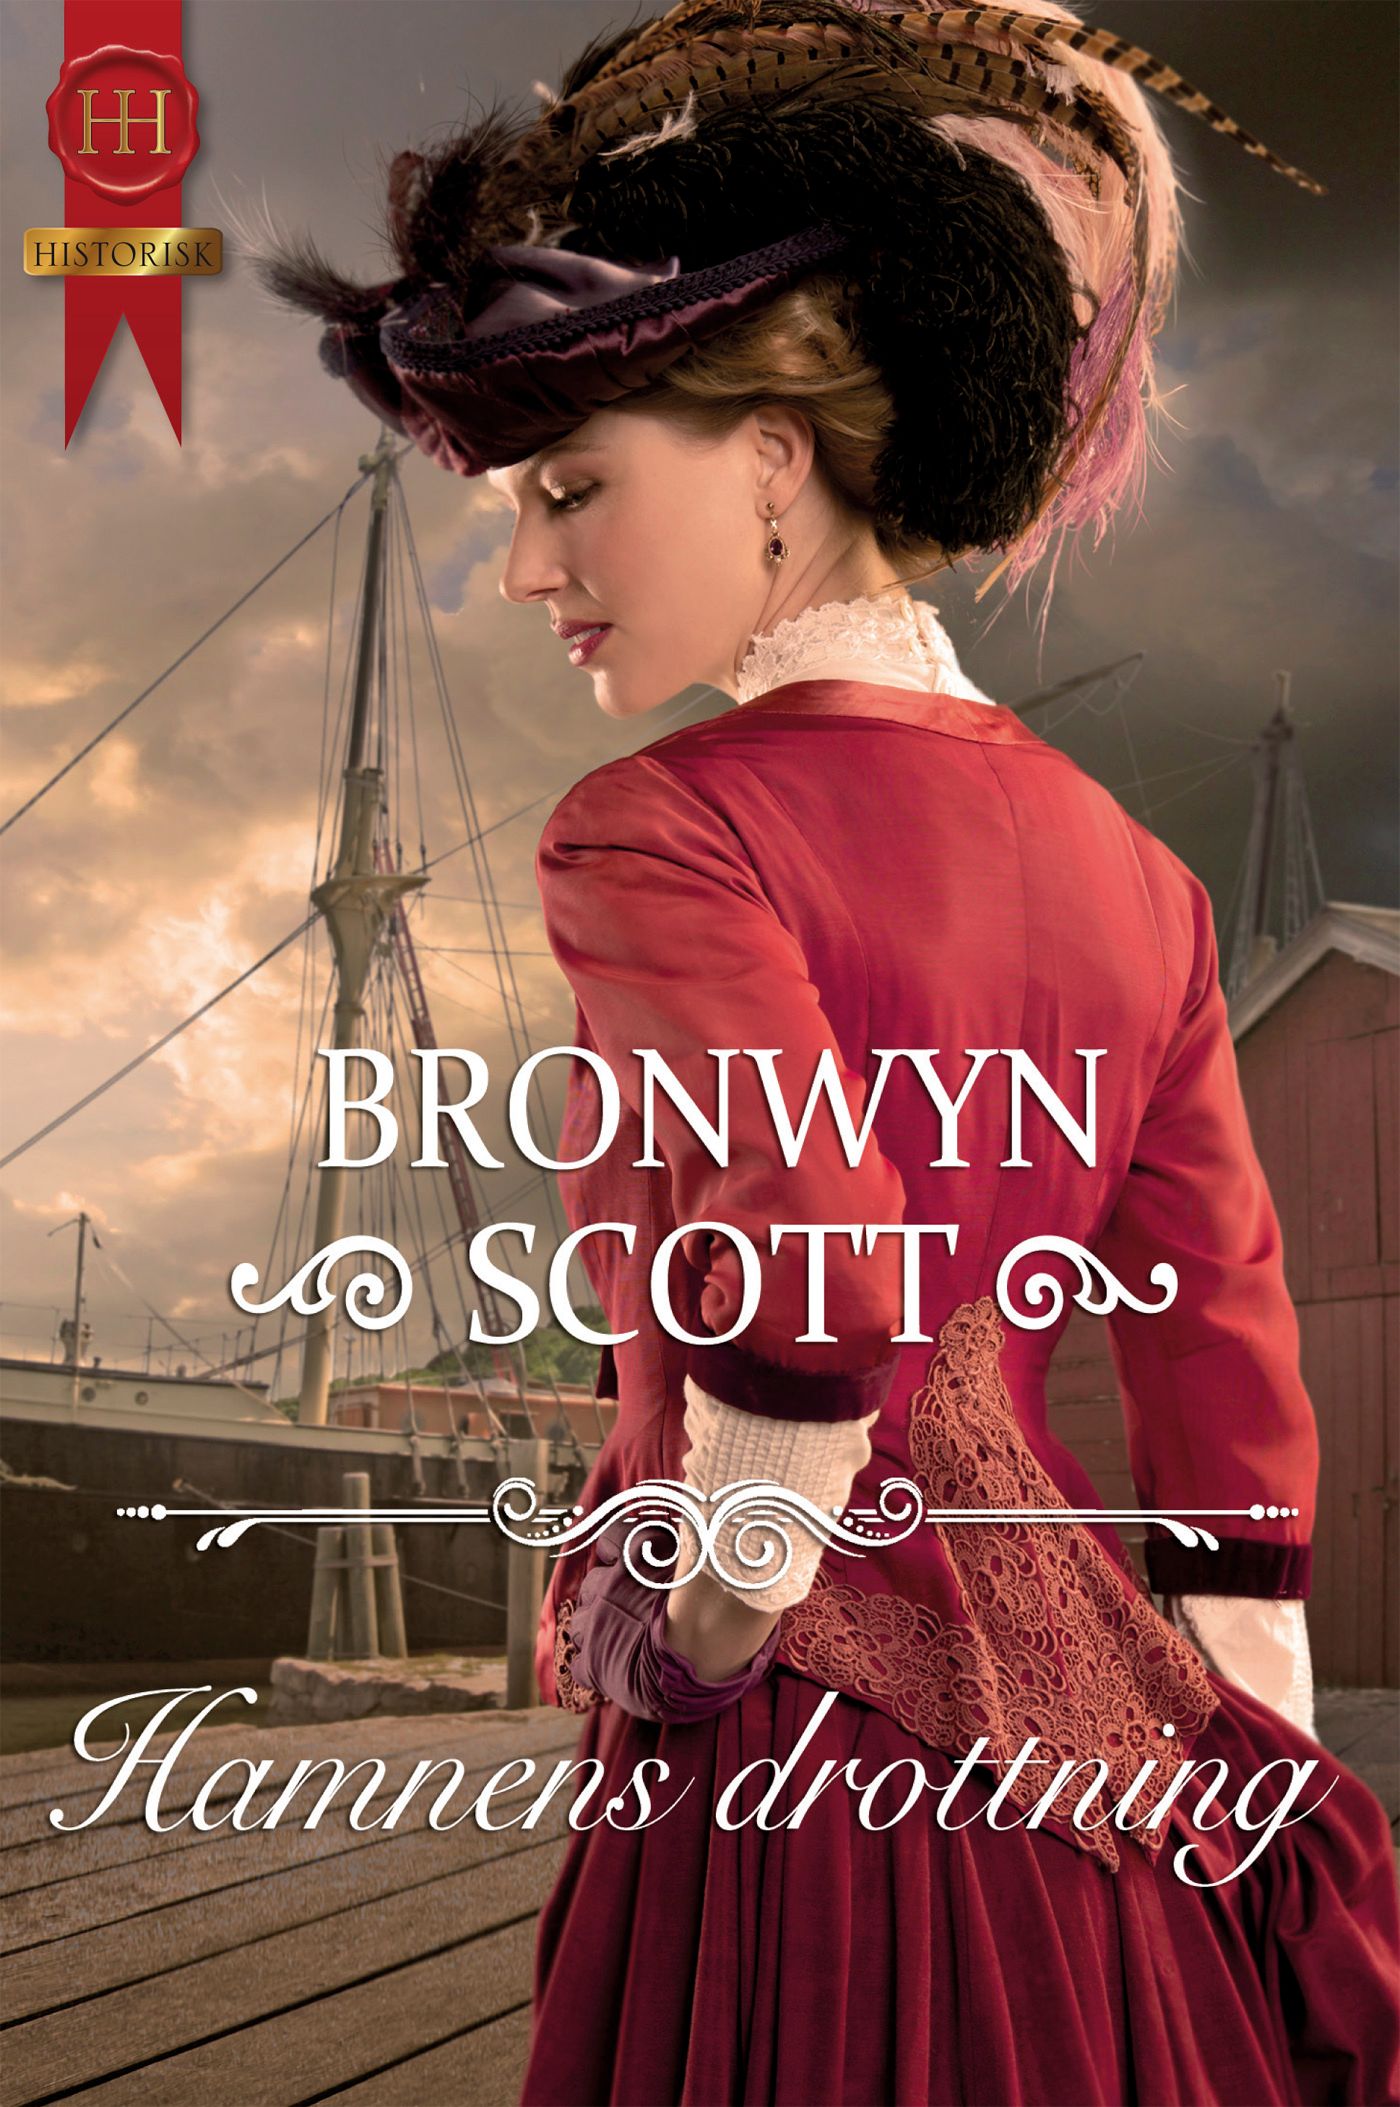 Hamnens drottning, eBook by Bronwyn Scott